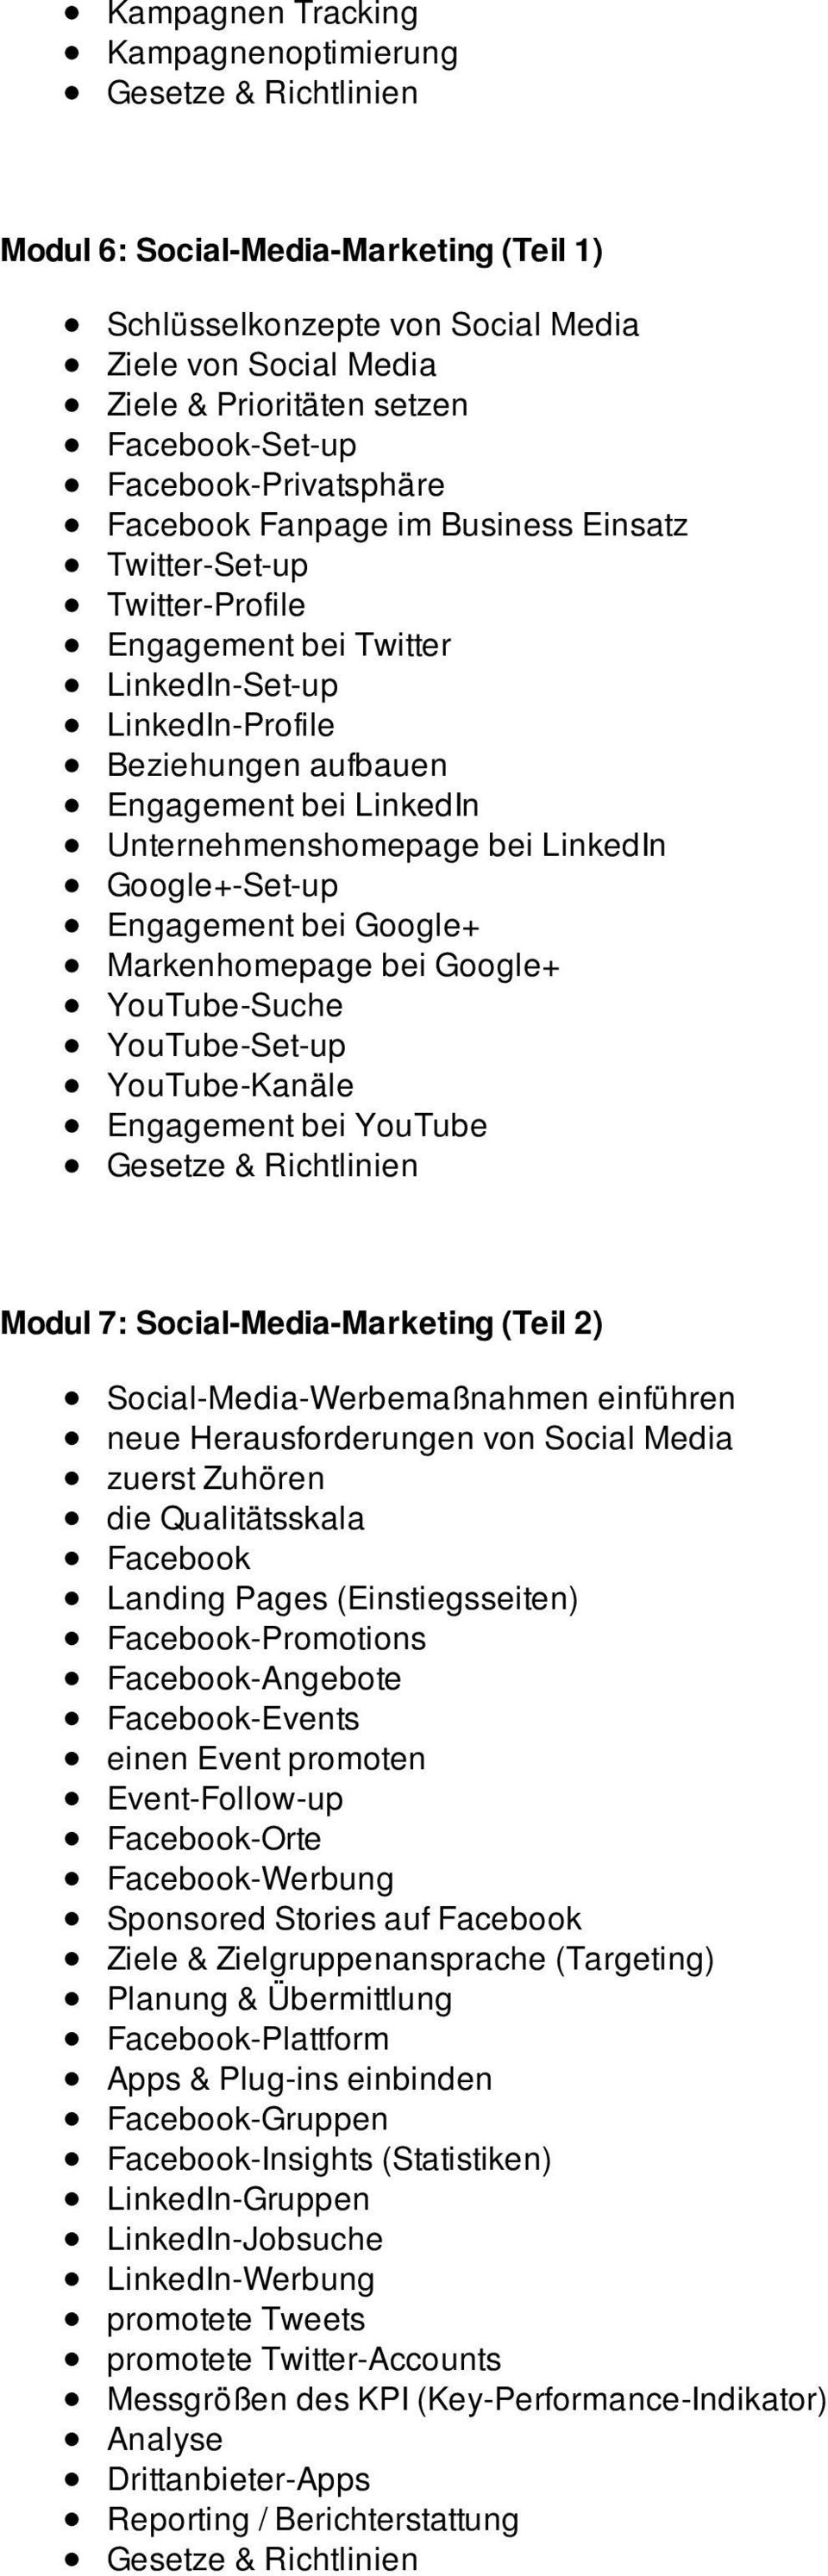 Unternehmenshomepage bei LinkedIn Google+-Set-up Engagement bei Google+ Markenhomepage bei Google+ YouTube-Suche YouTube-Set-up YouTube-Kanäle Engagement bei YouTube Modul 7: Social-Media-Marketing